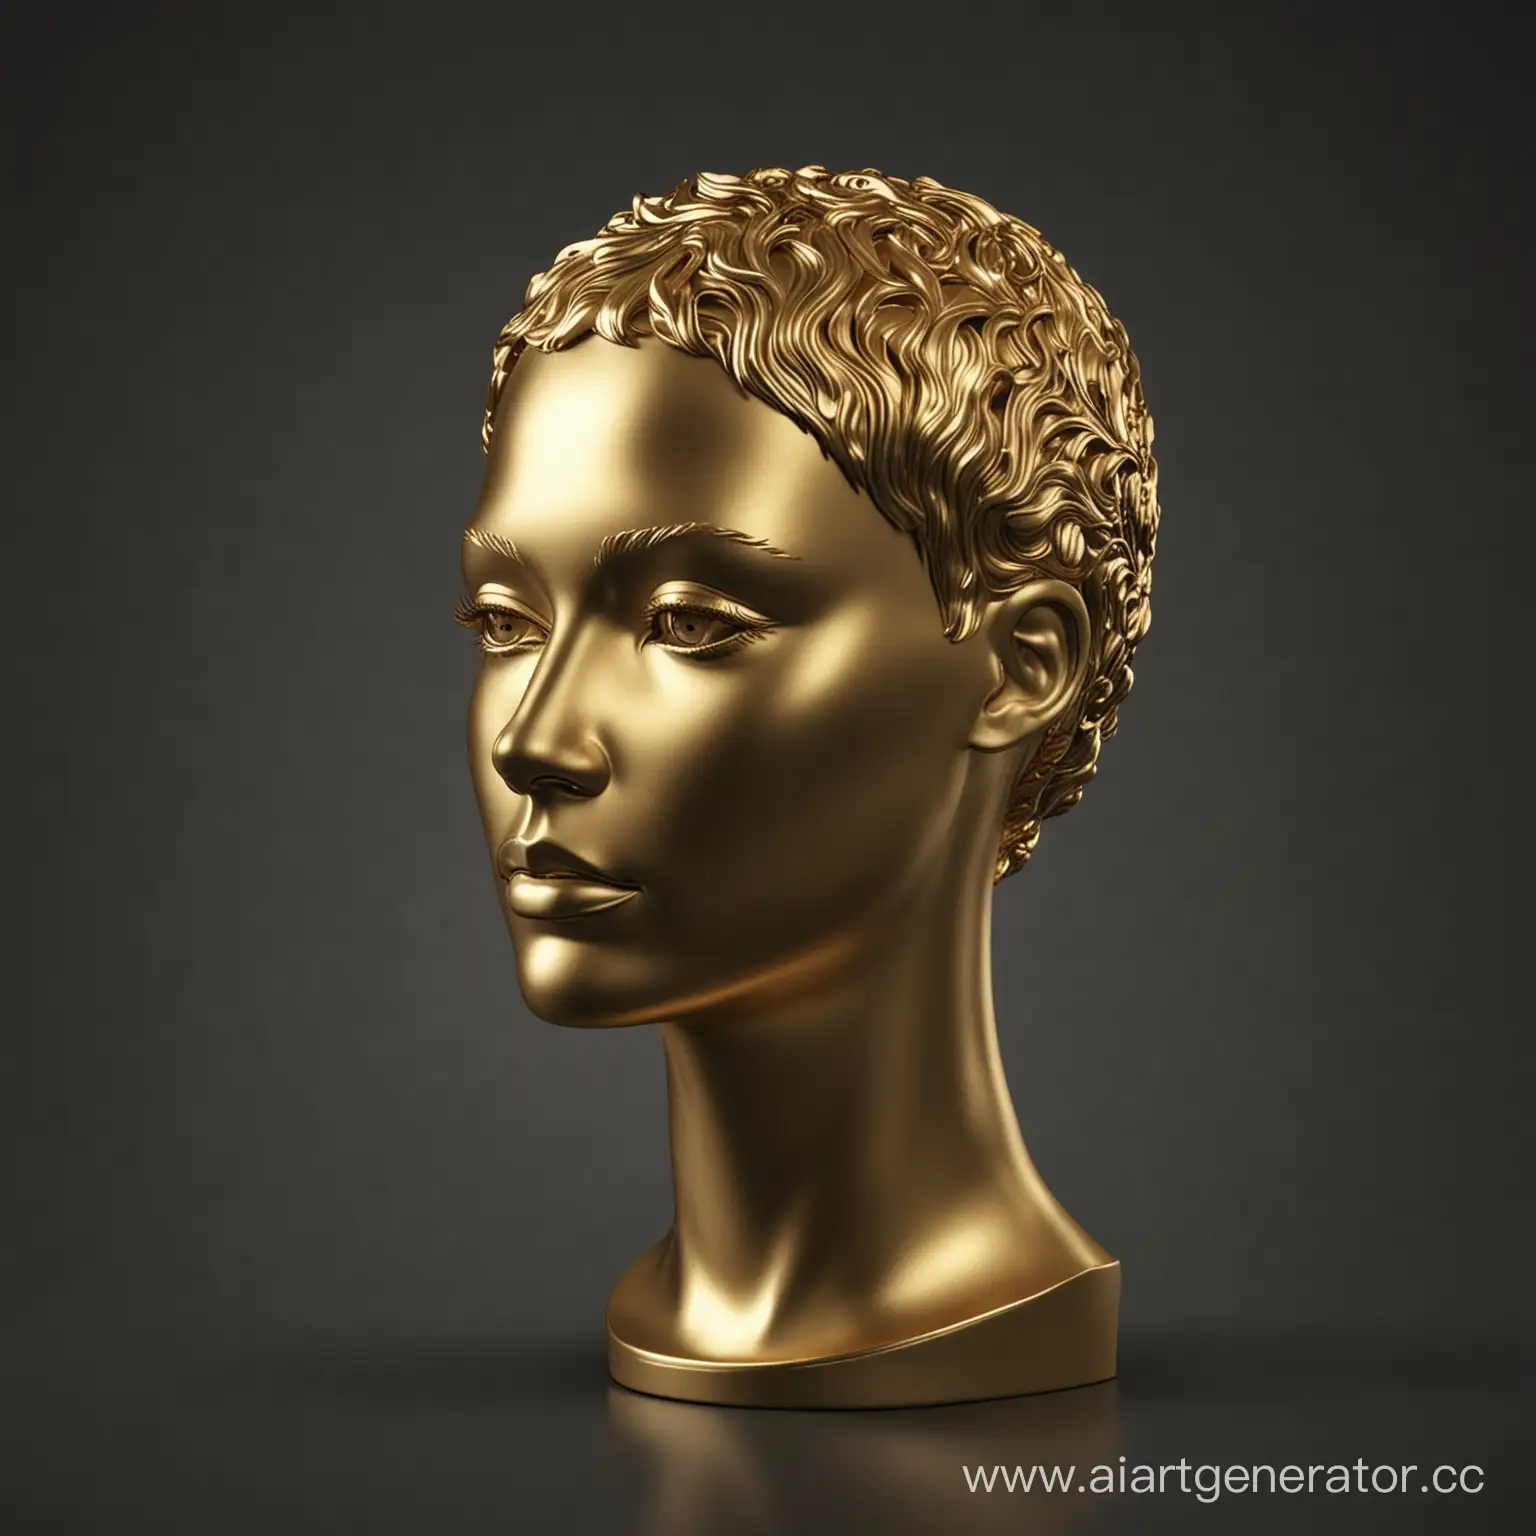 Golden-3D-Mannequin-Head-with-Reflective-Details-on-Black-Background